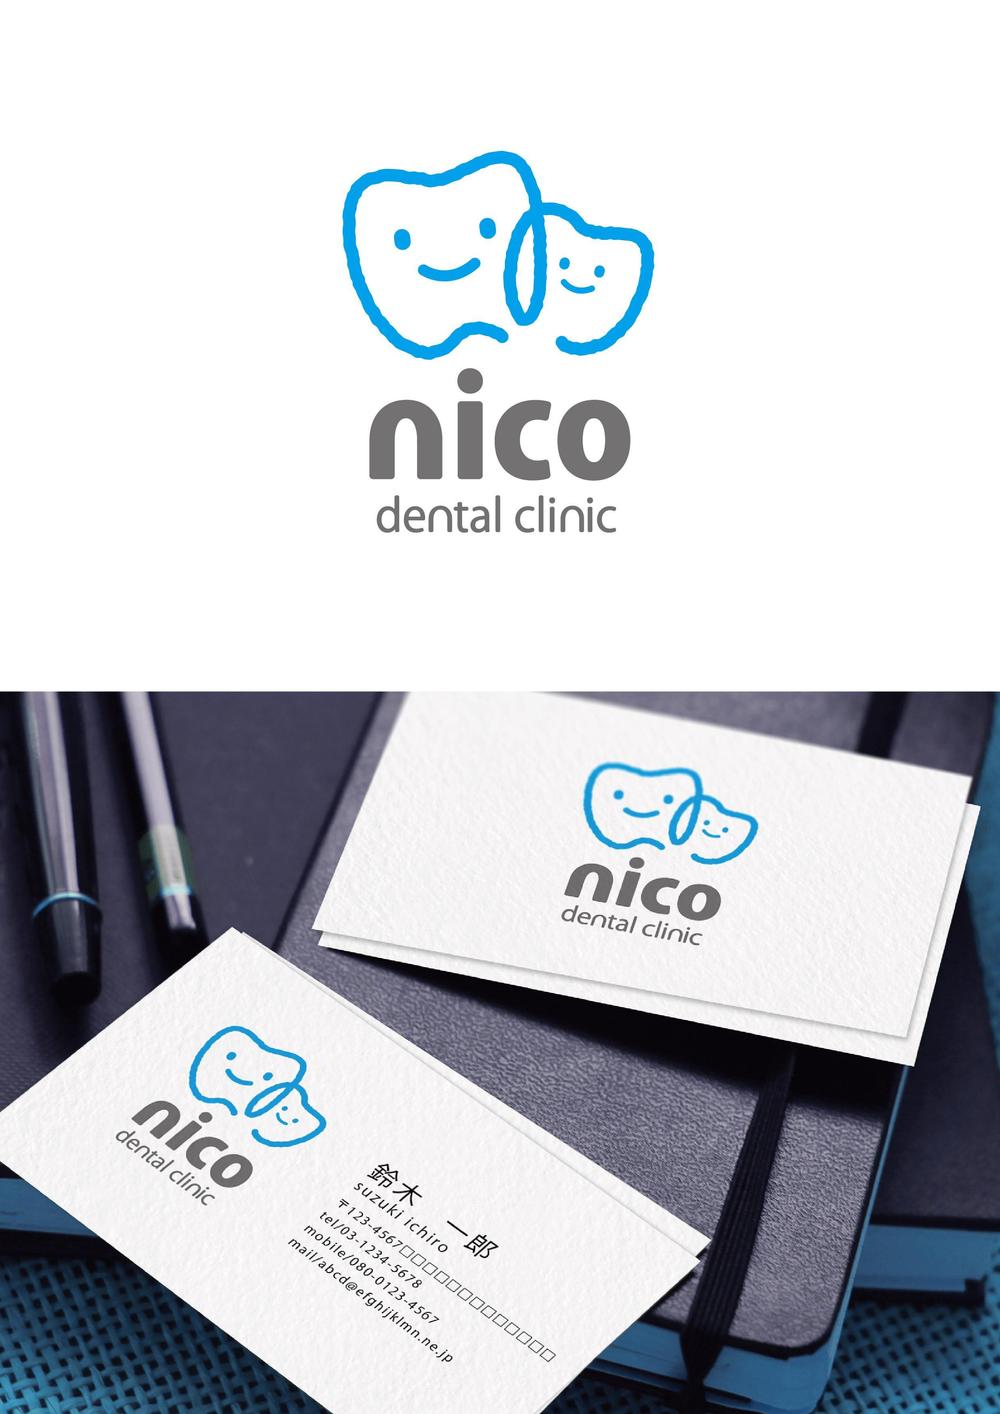 nico dental clinic2-01.jpg